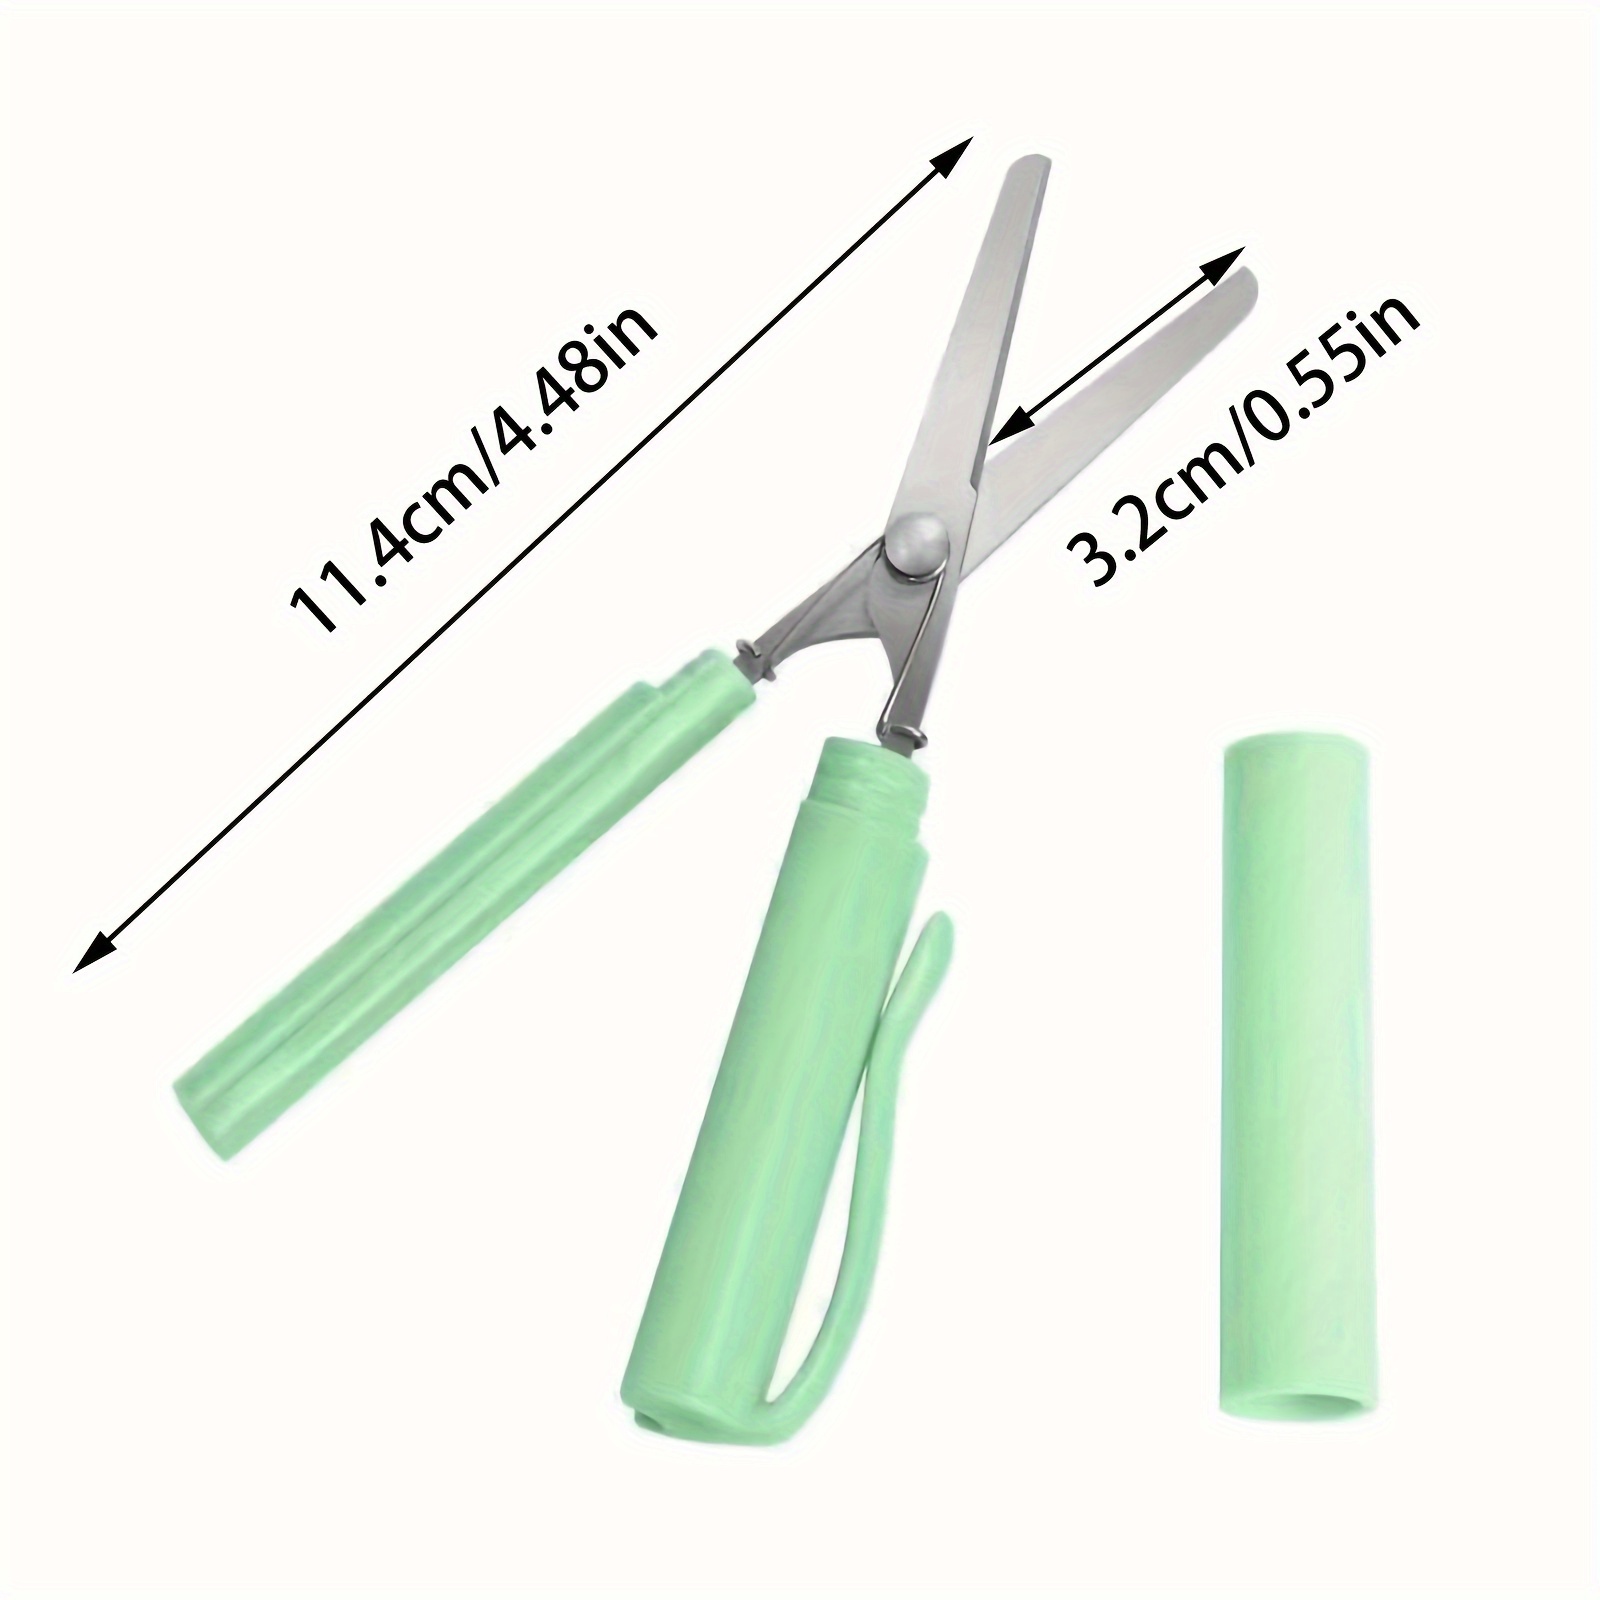 RRA916 Creative Folding Mini Scissors For Office, School & Art Portable &  Simple Paper Cutting Tool From B2b_beautiful, $1.1